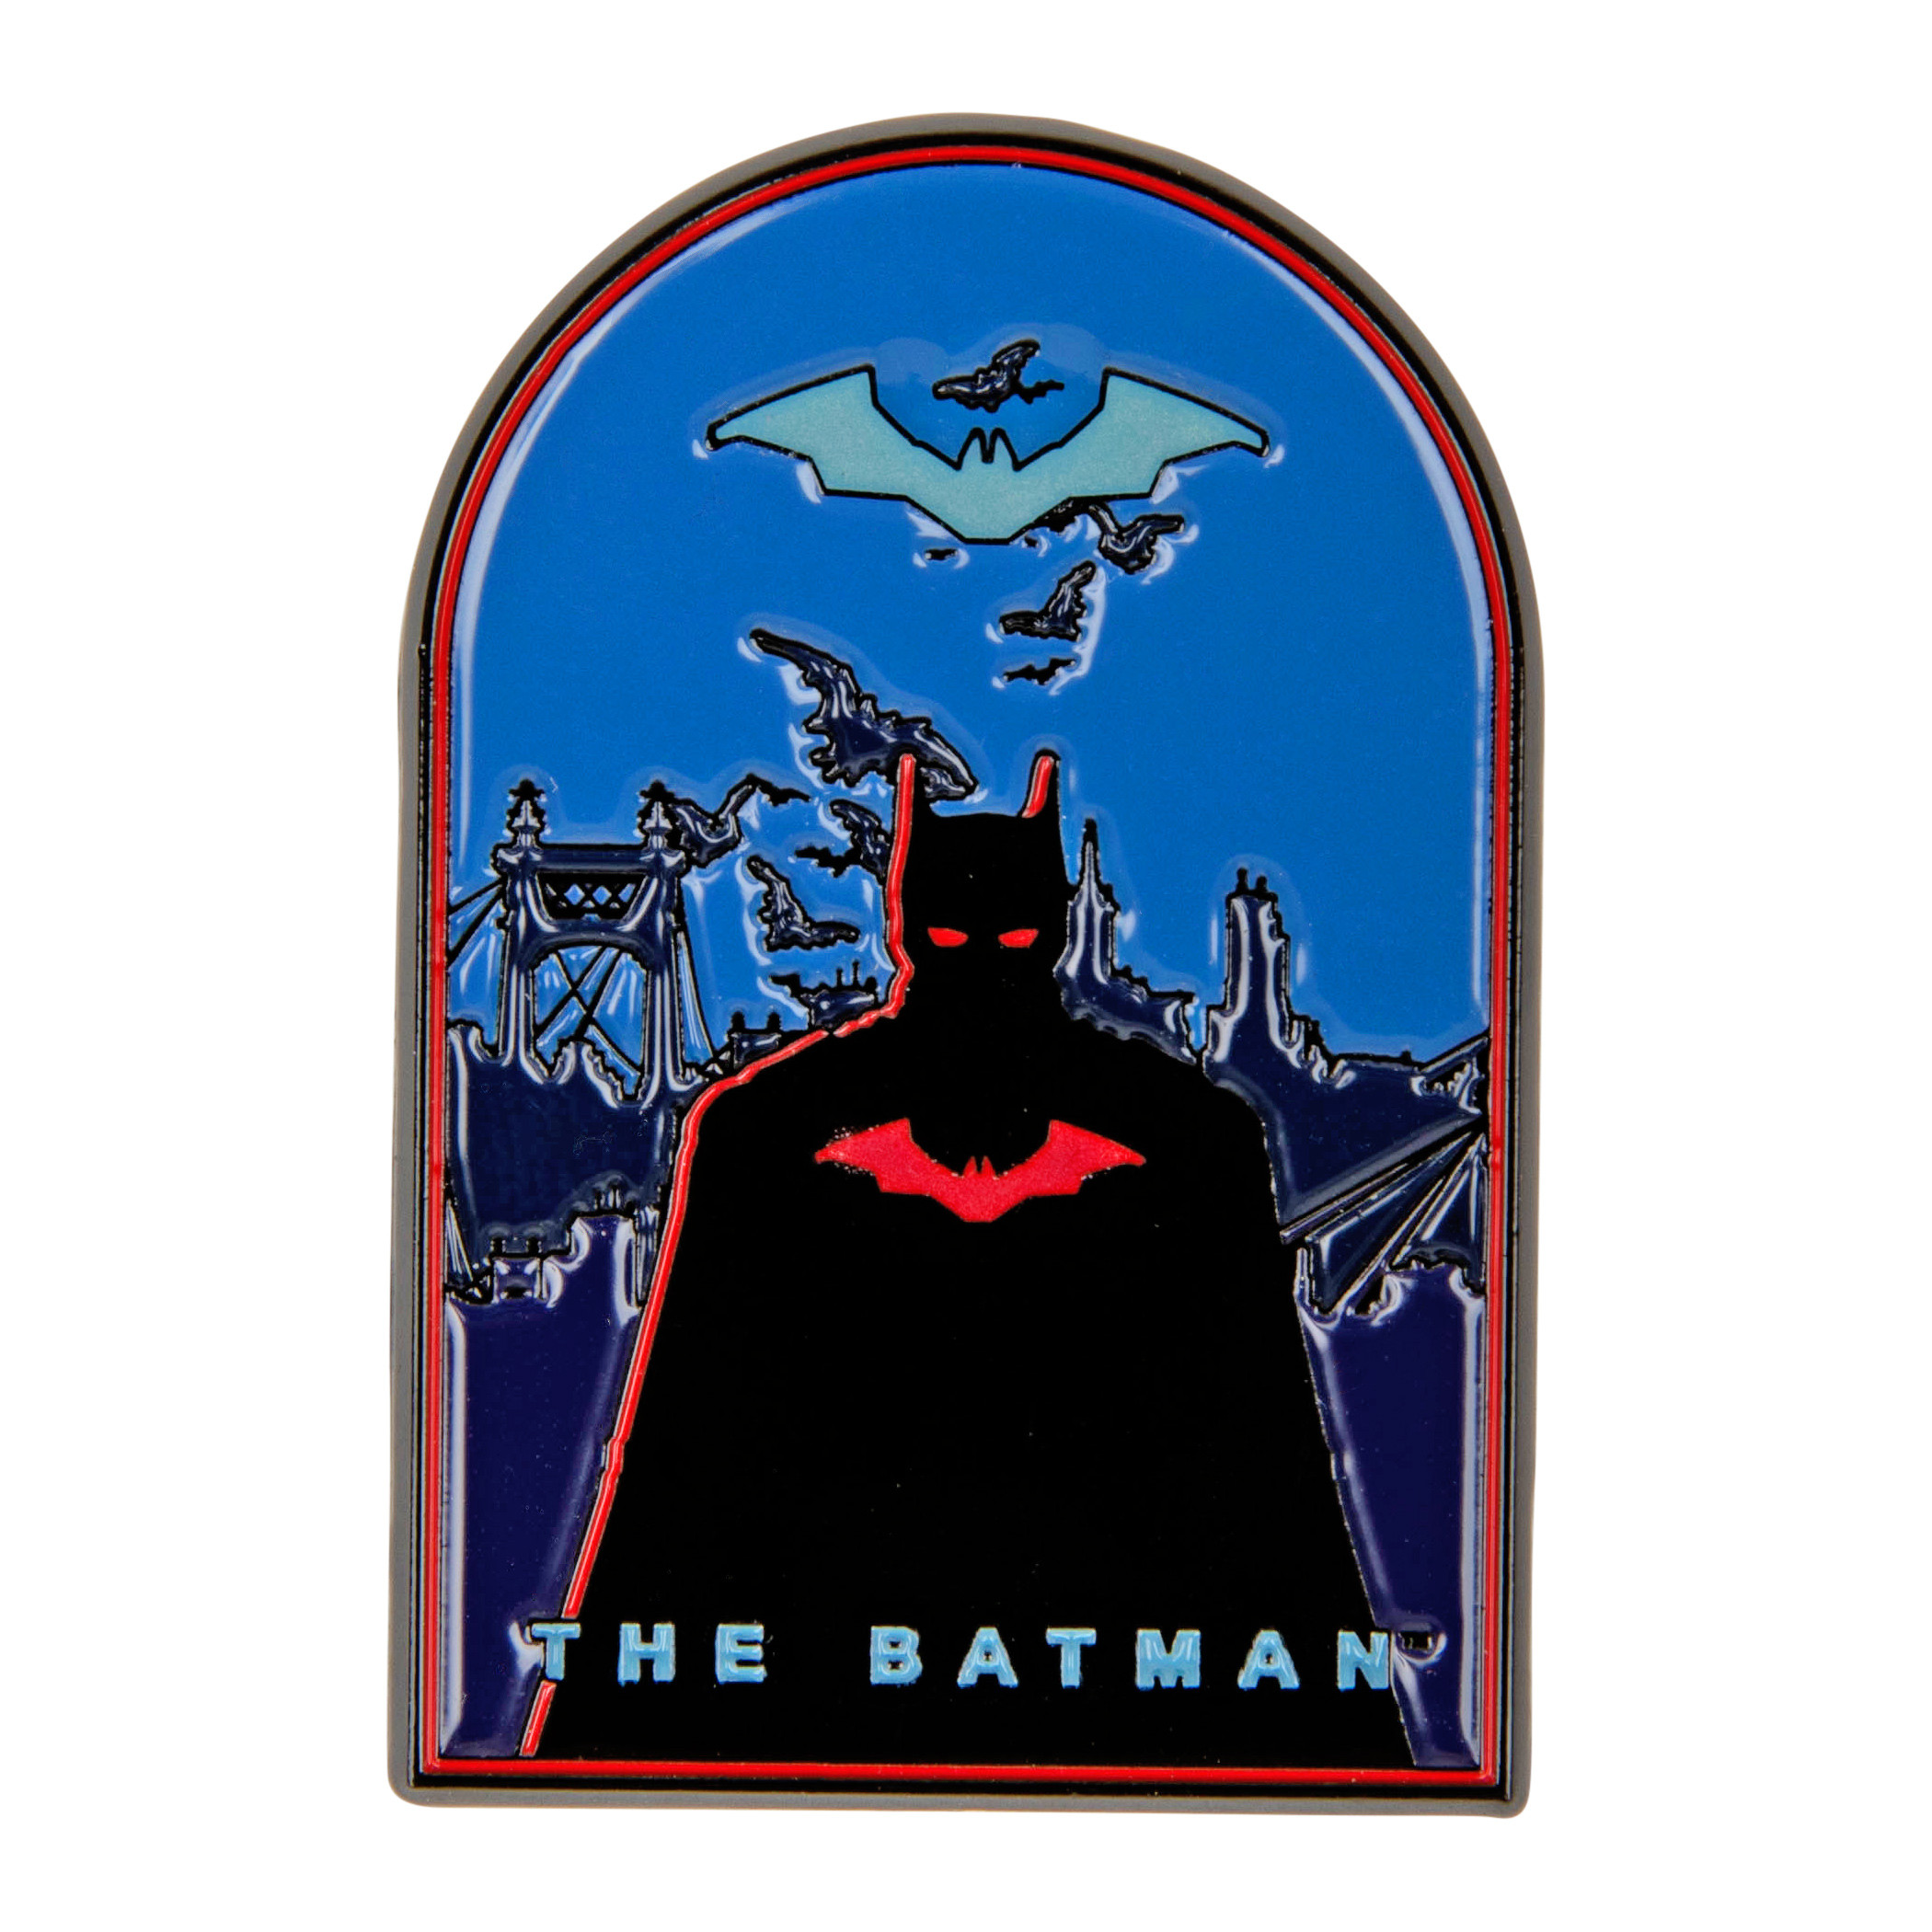 The Batman Above the City Pin Badge